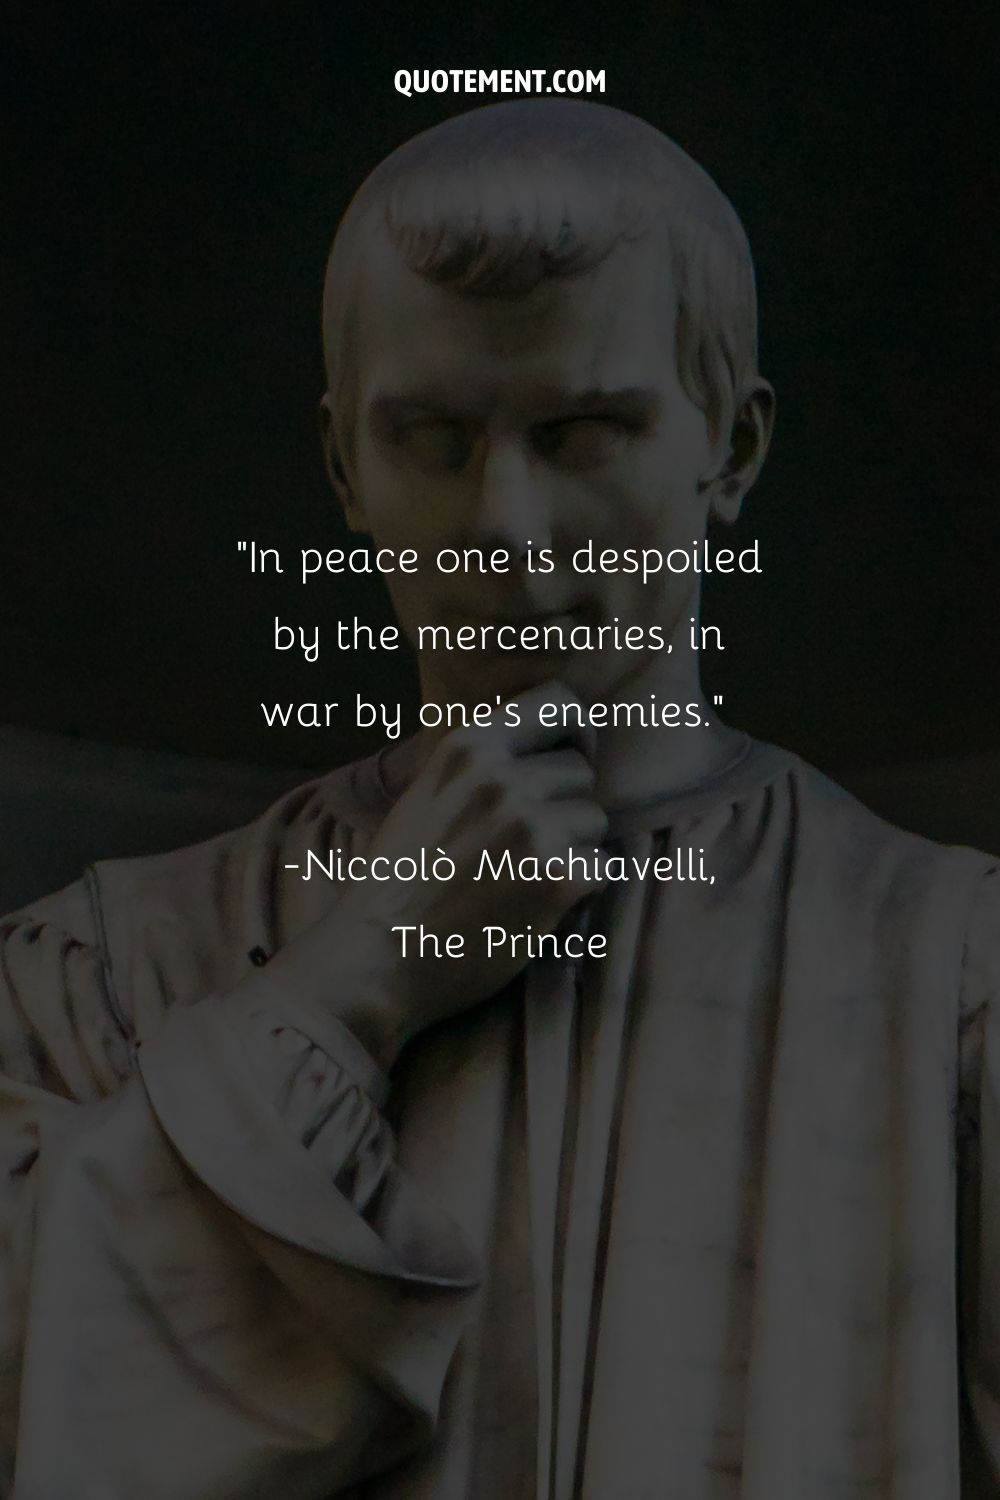 In peace one is despoiled by the mercenaries, in war by one's enemies